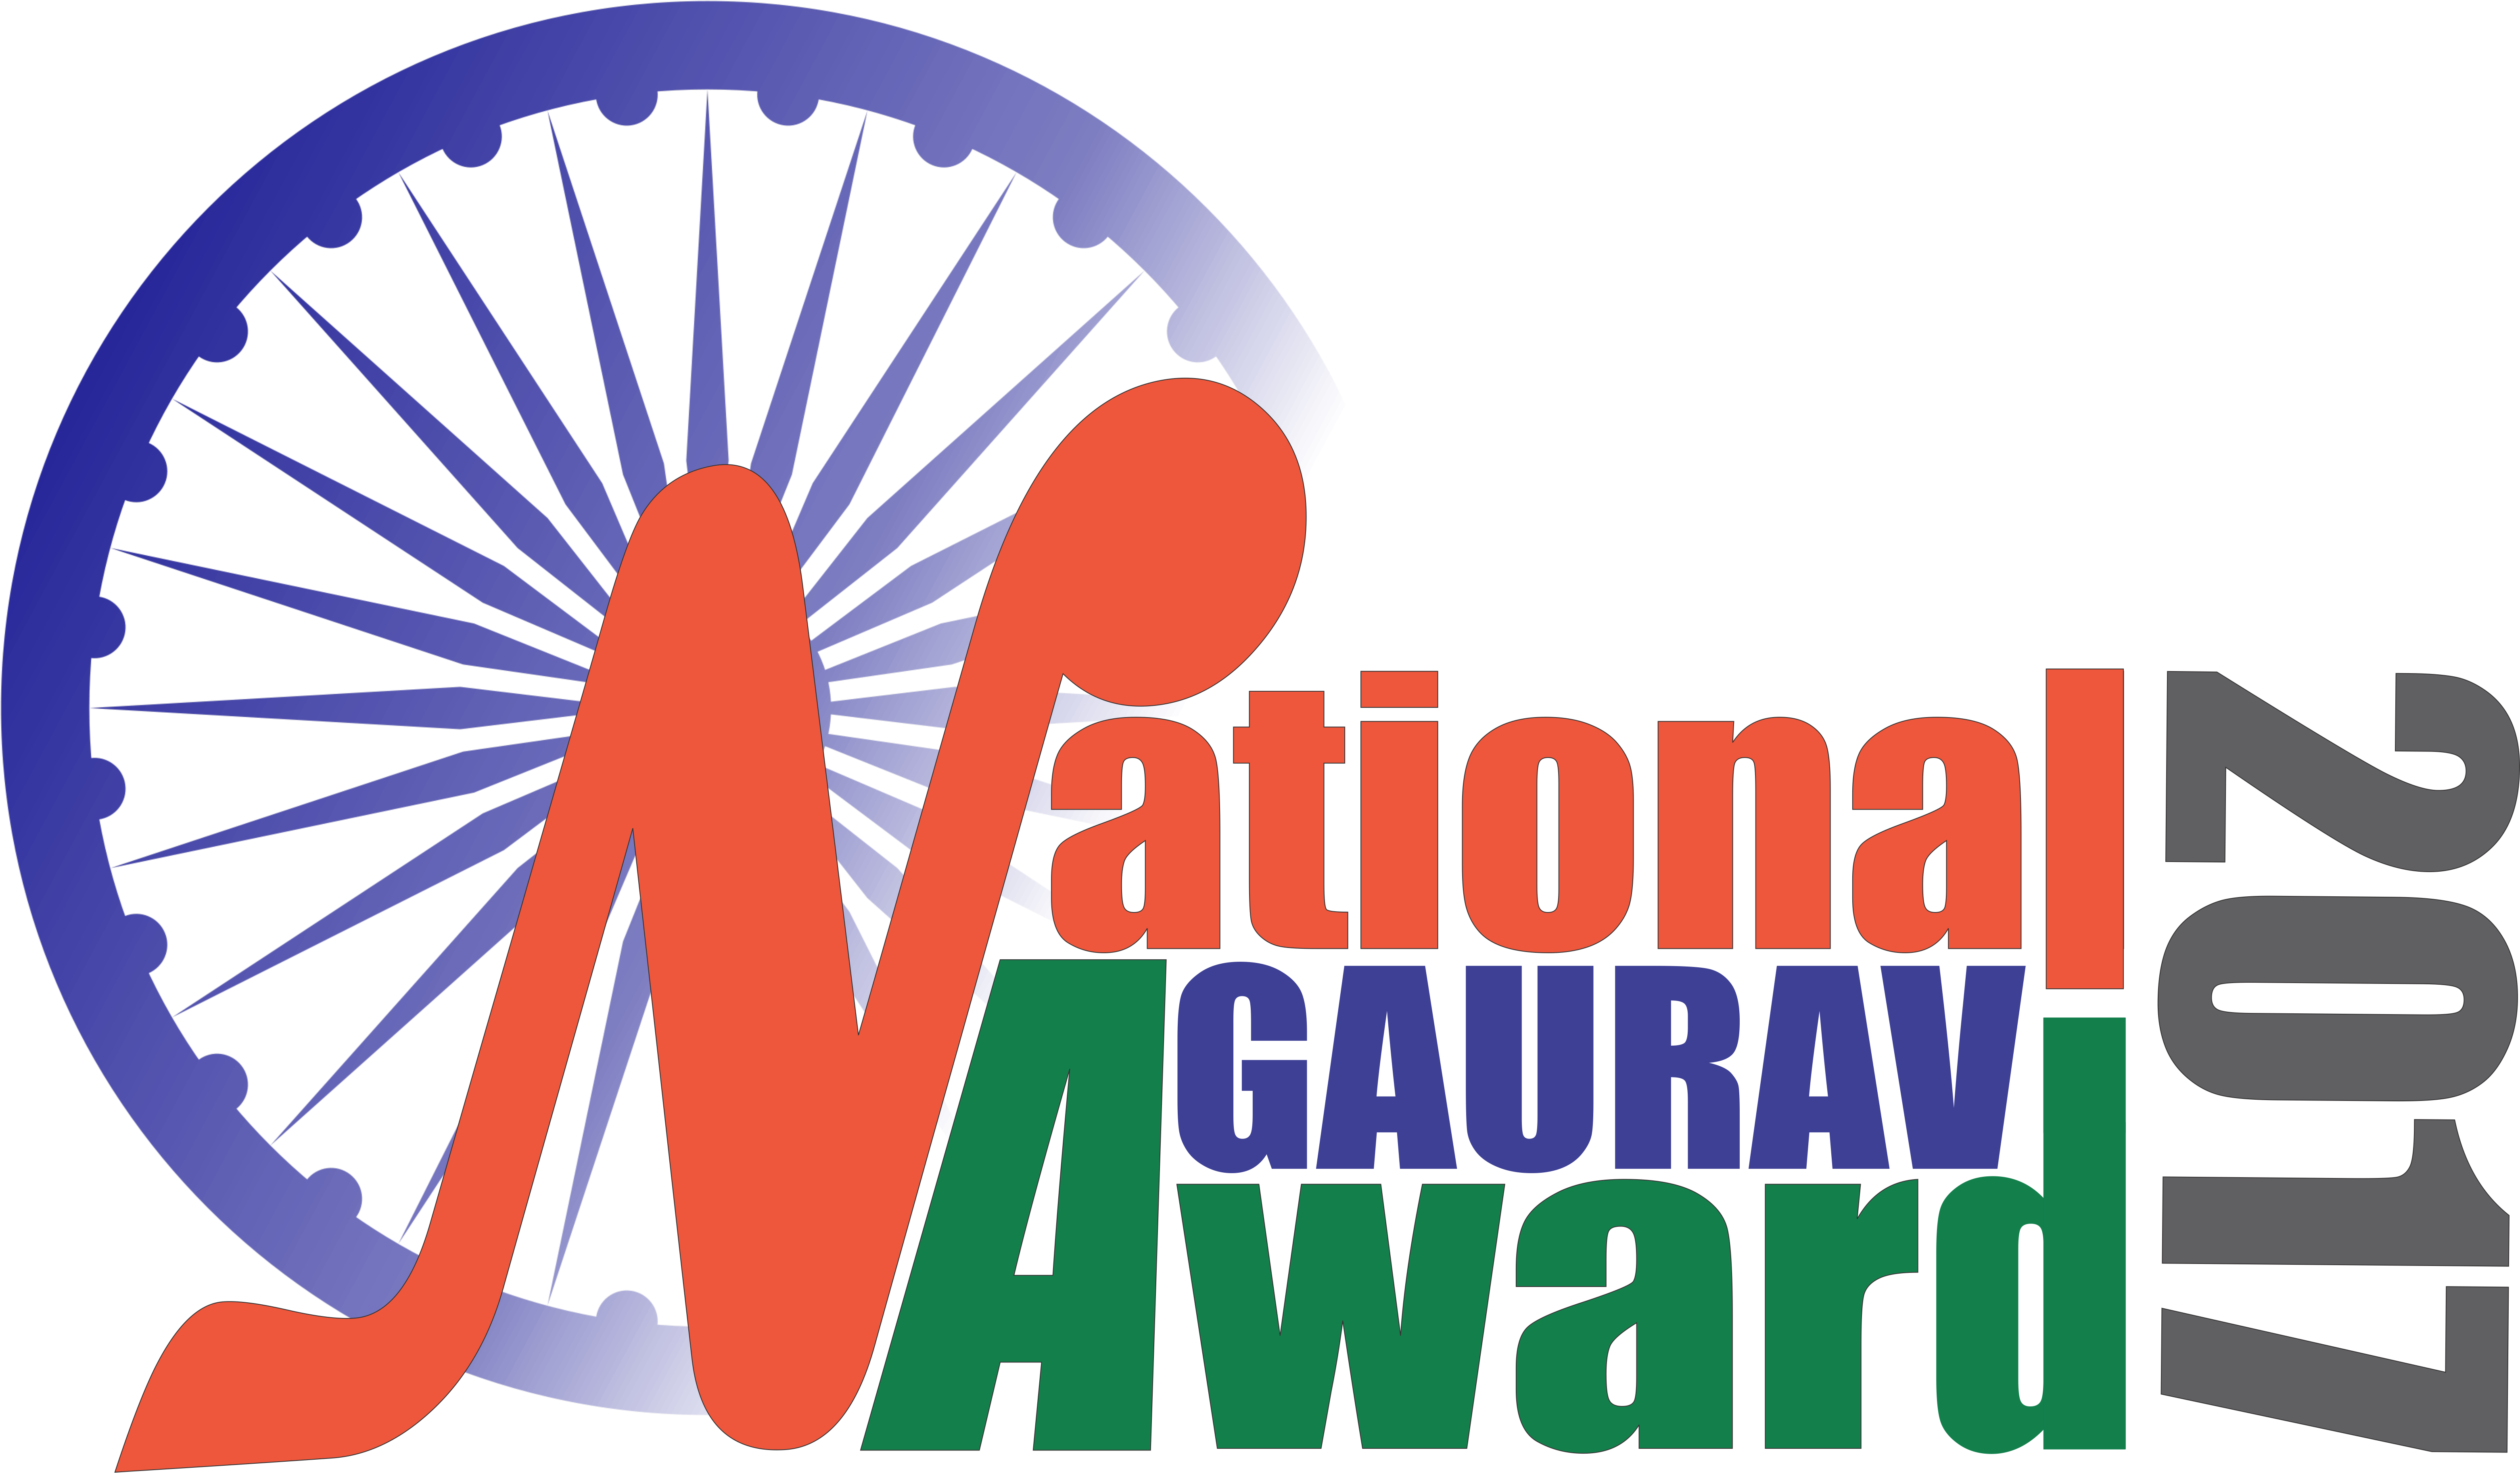 National Gaurav Award - Craft And Hobby Association (6331x3735)